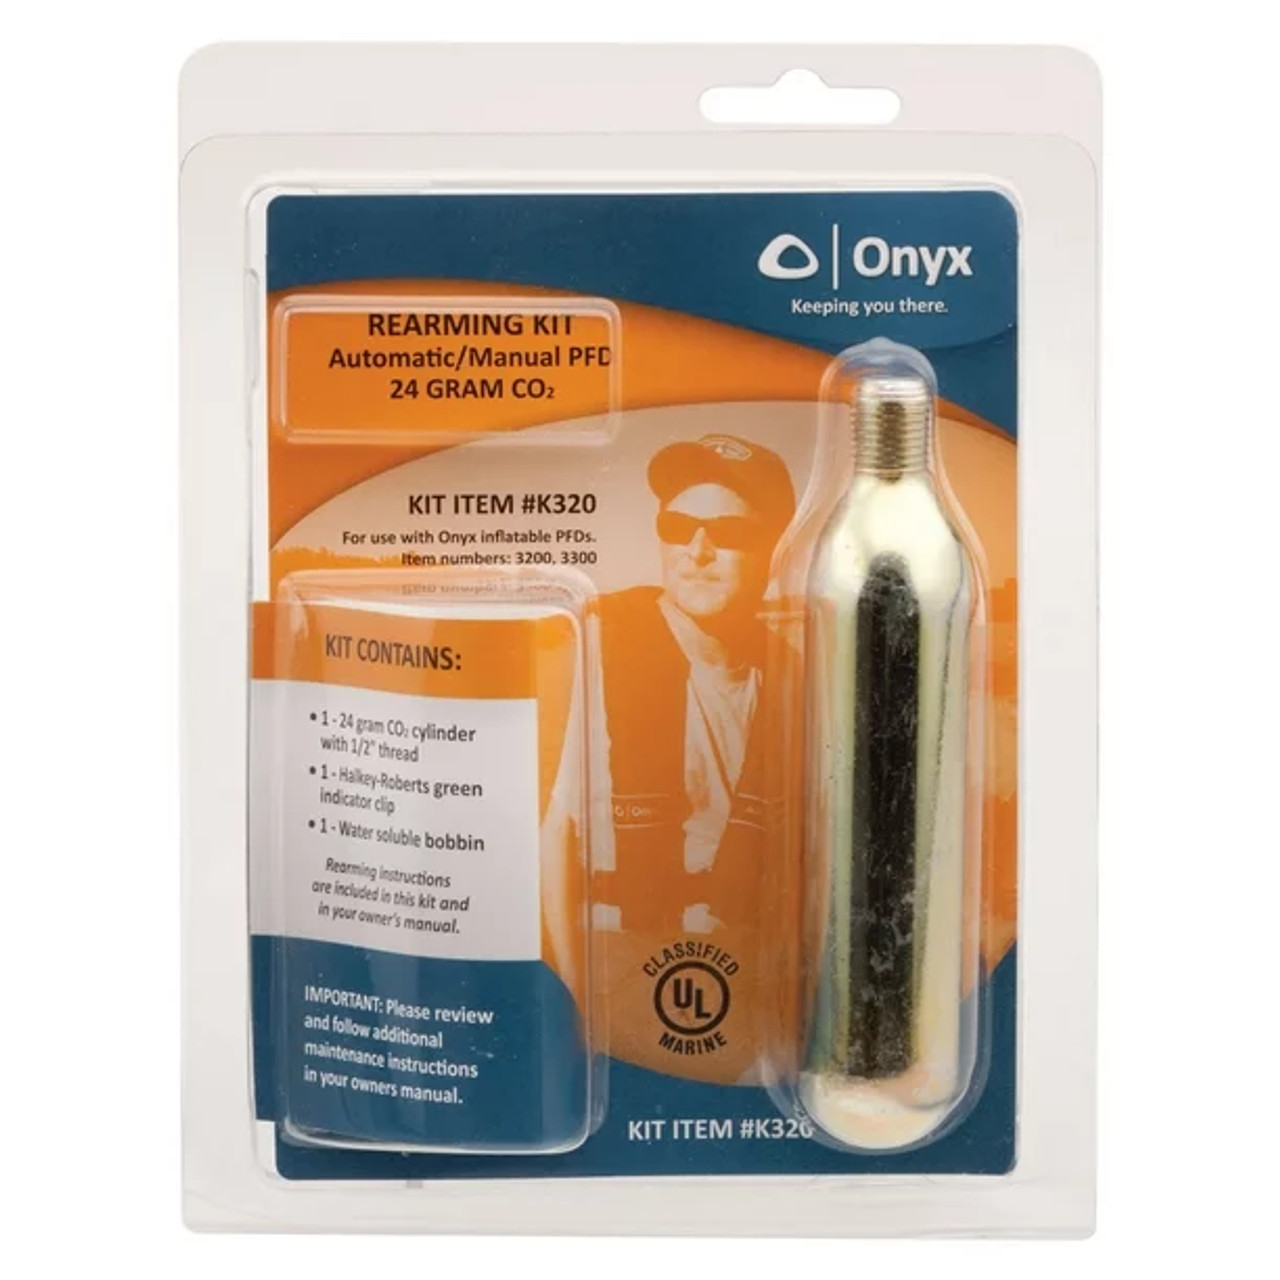 Onyx Auto/Manual-24 Gram Rearming Kit